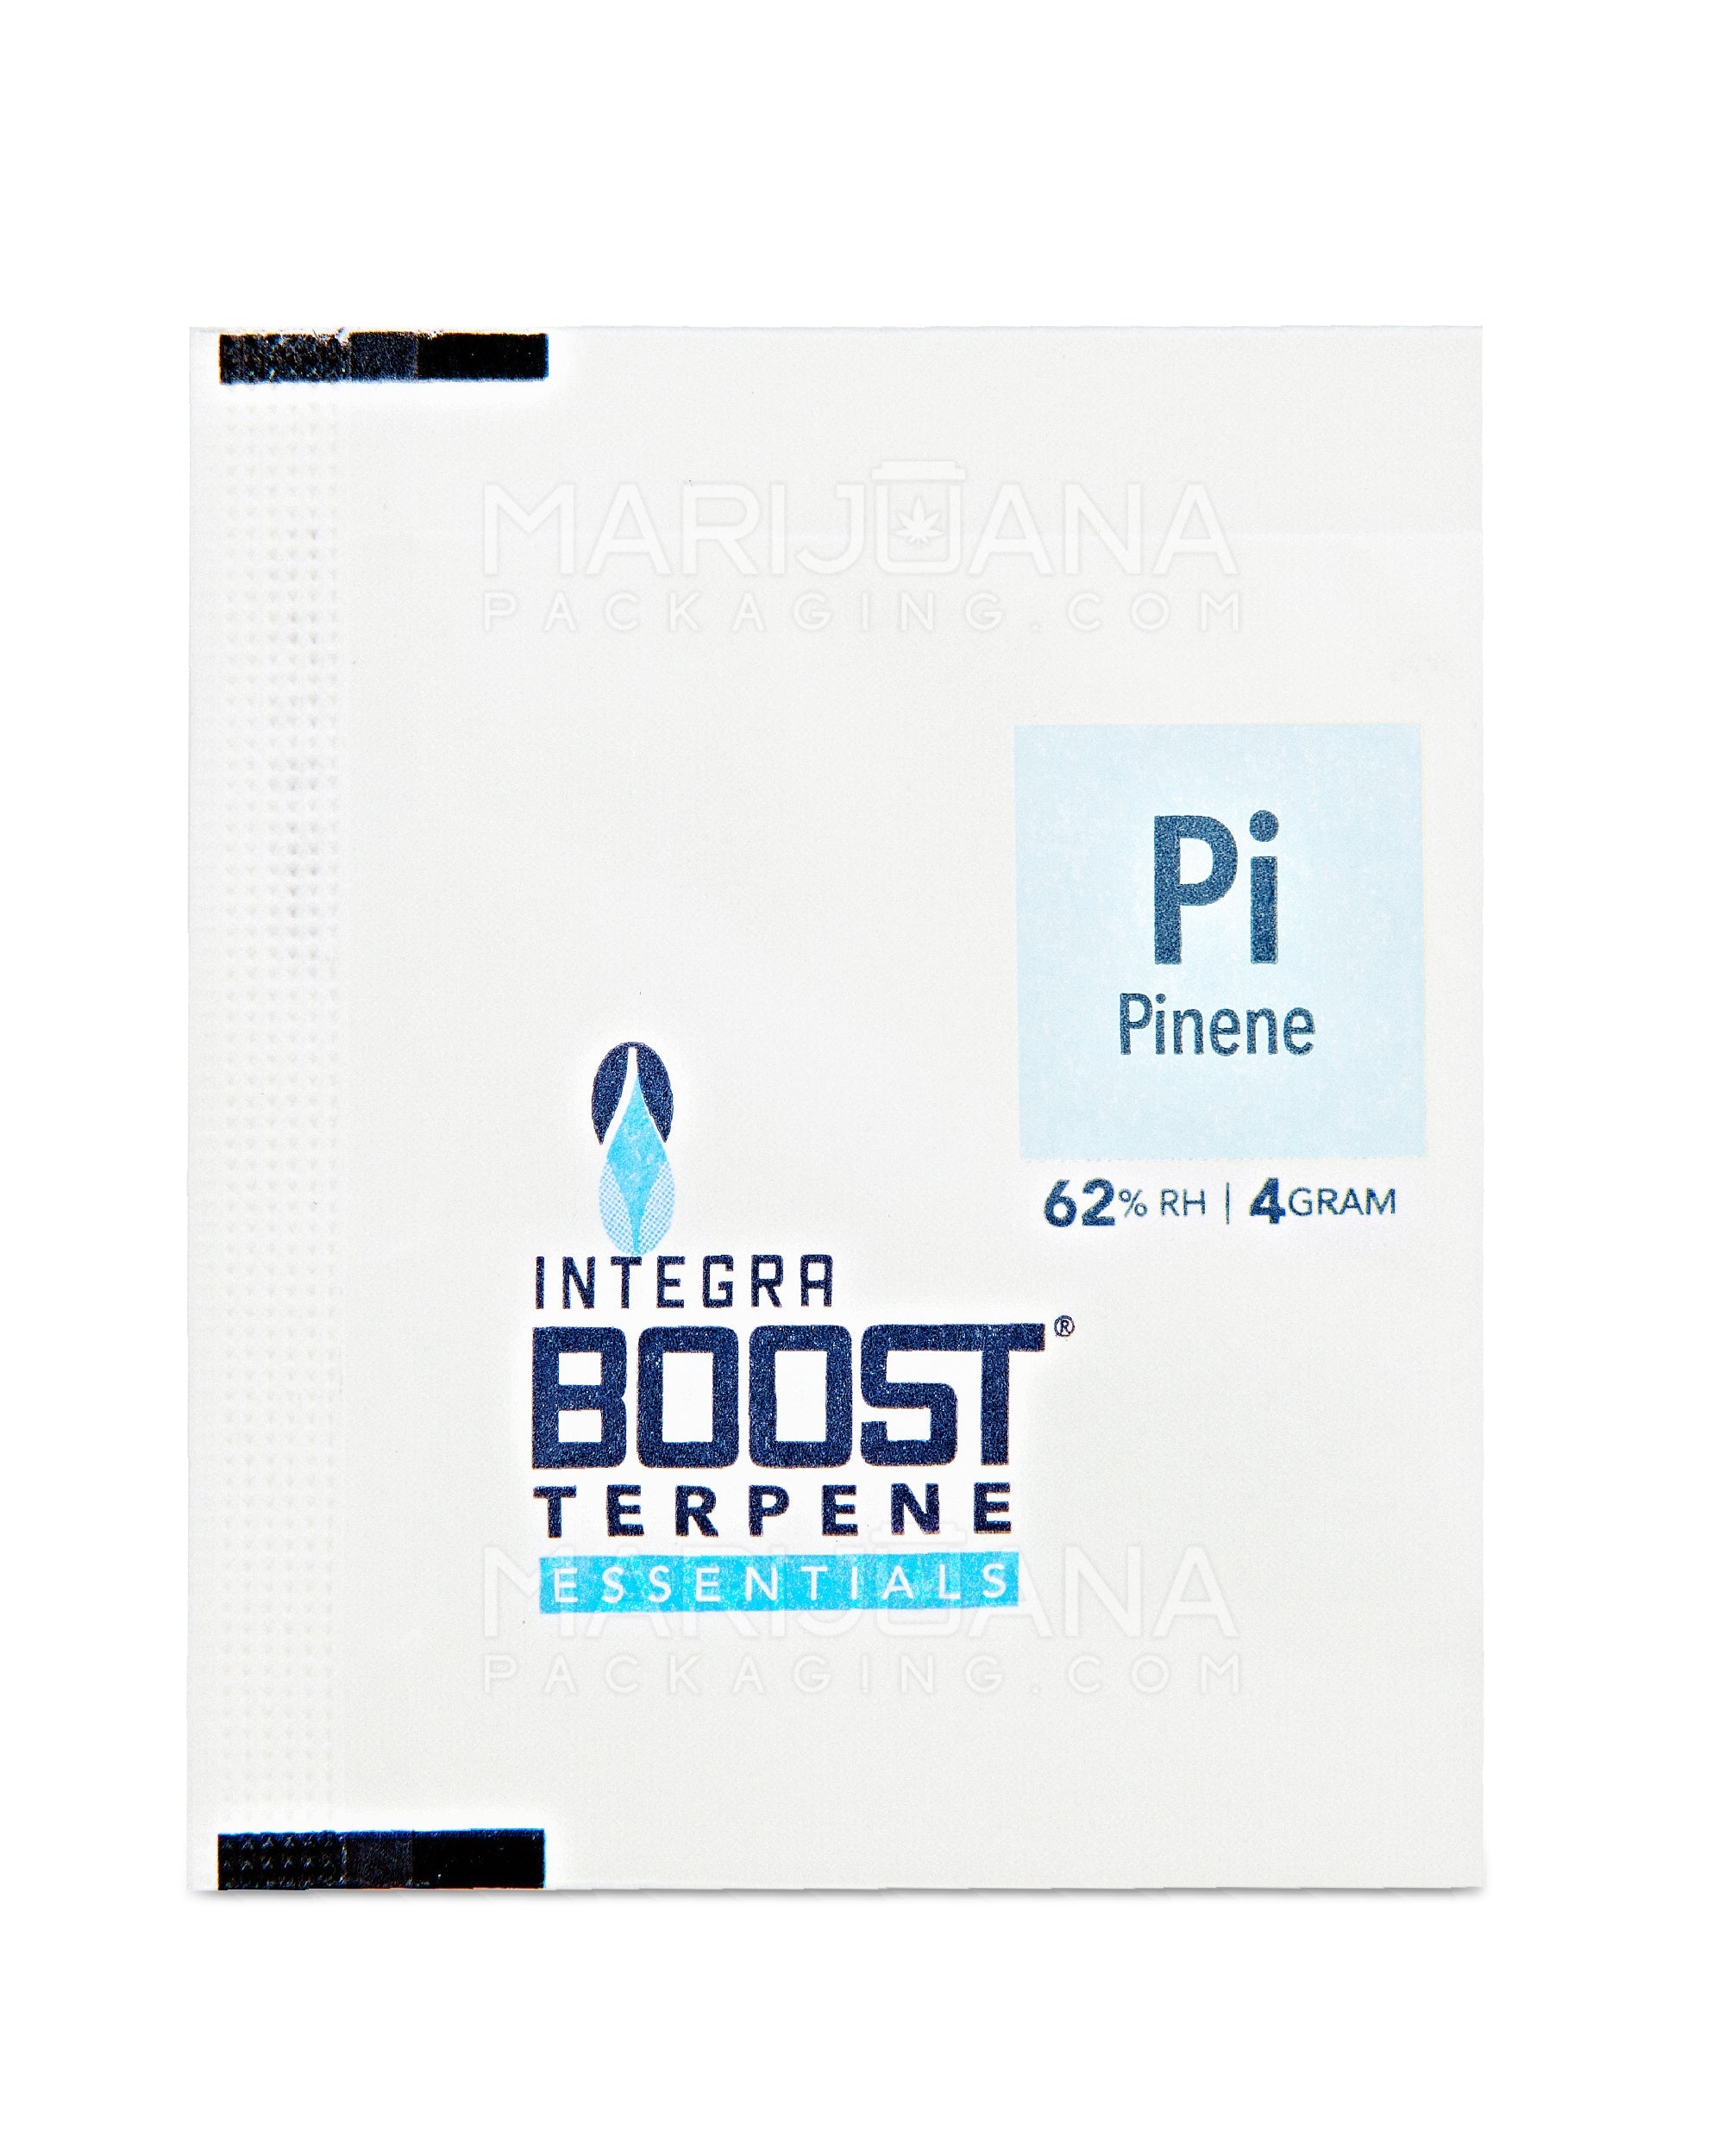 INTEGRA Boost Terpene Essentials Pinene Humidity Pack | 4 Grams - 62% | Sample - 3